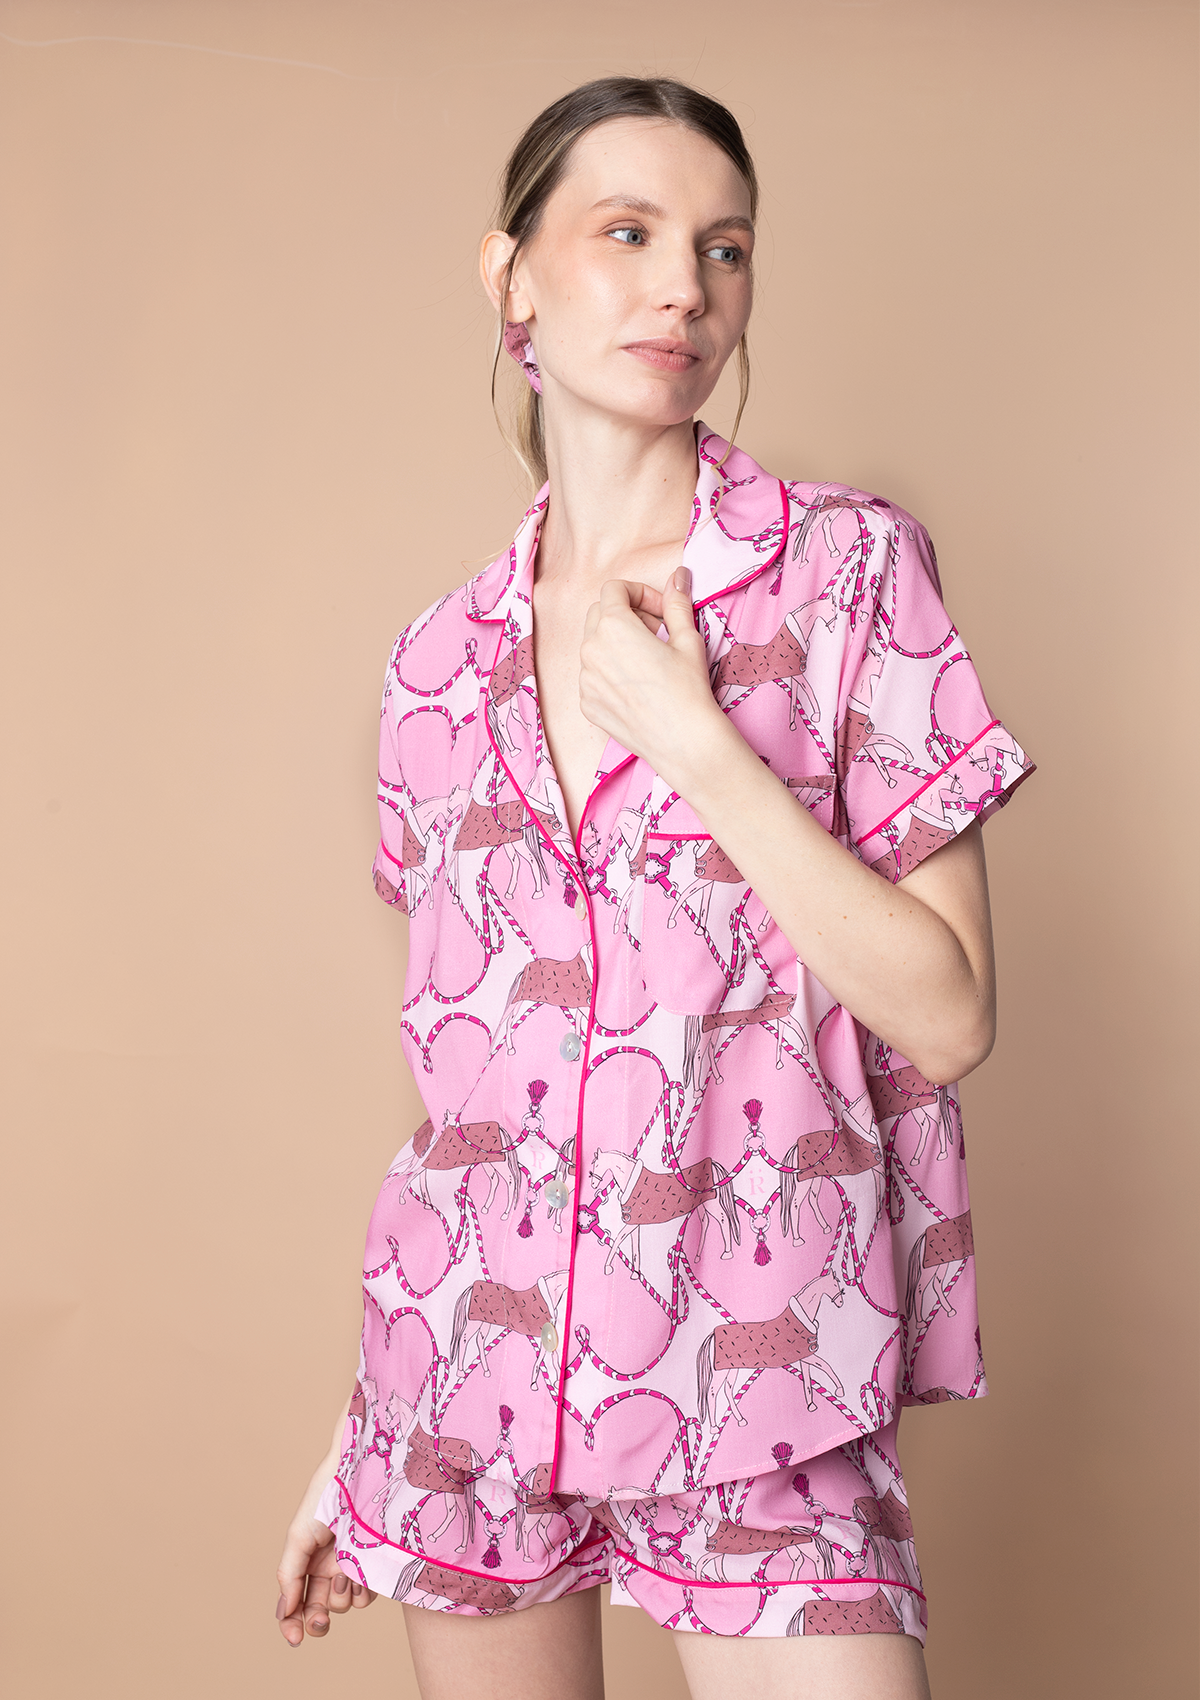 Horsebond PJ’s Set Short Sleeve | Pink | Equestrian Sleepwear Collection - Rönner